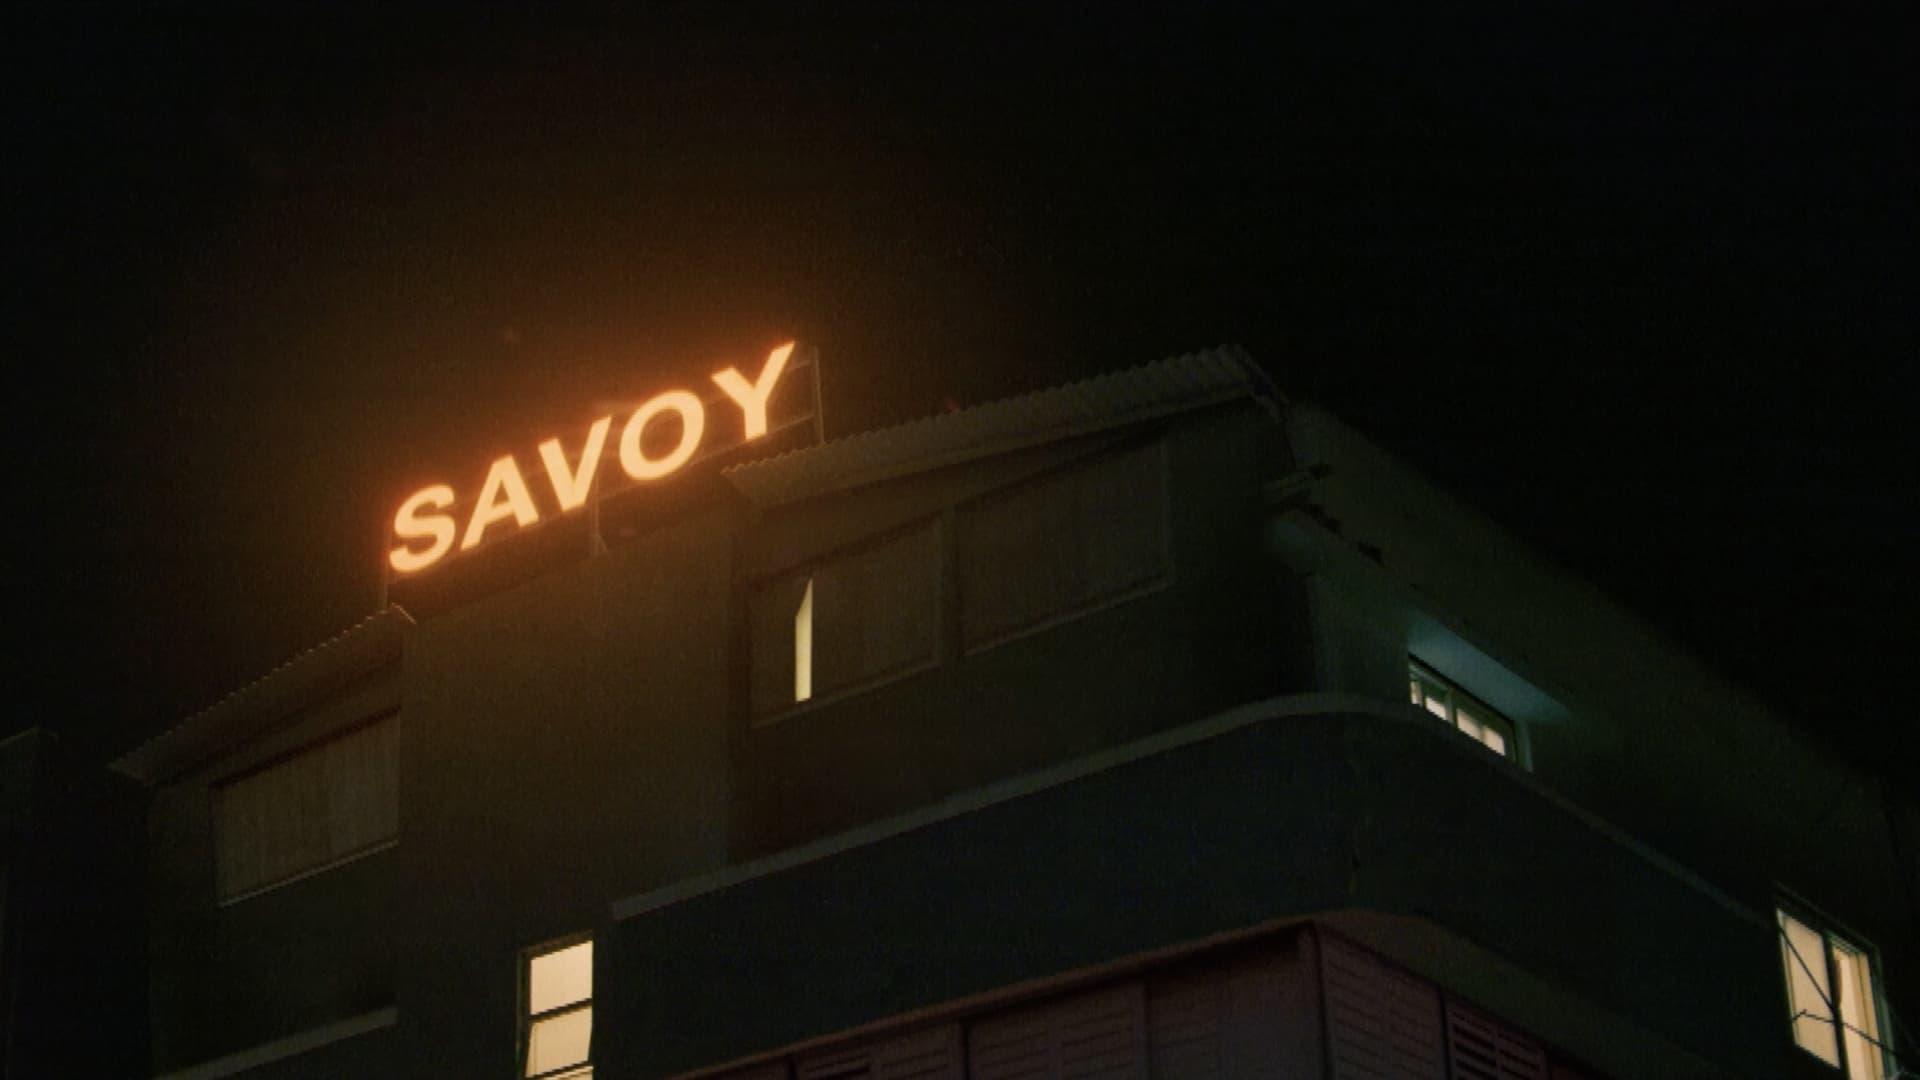 Savoy backdrop